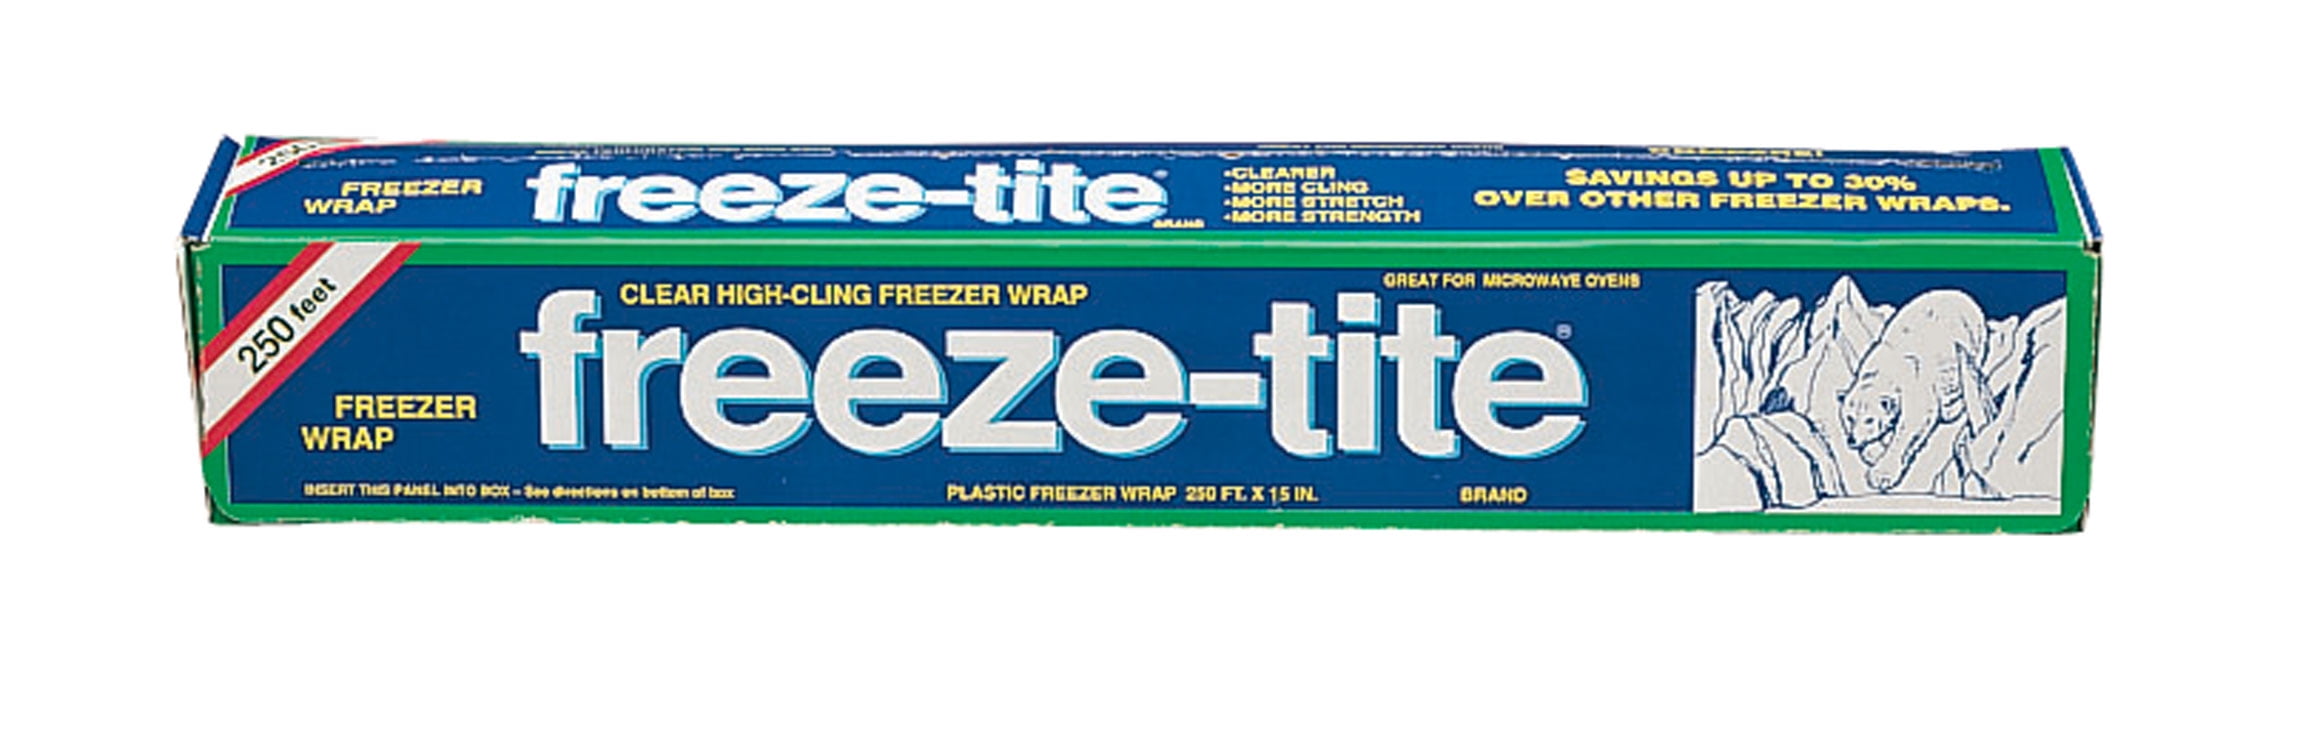 Premium Plastic Freezer Food Wrap Freeze-tite 315 FT X 14 5/8-inch